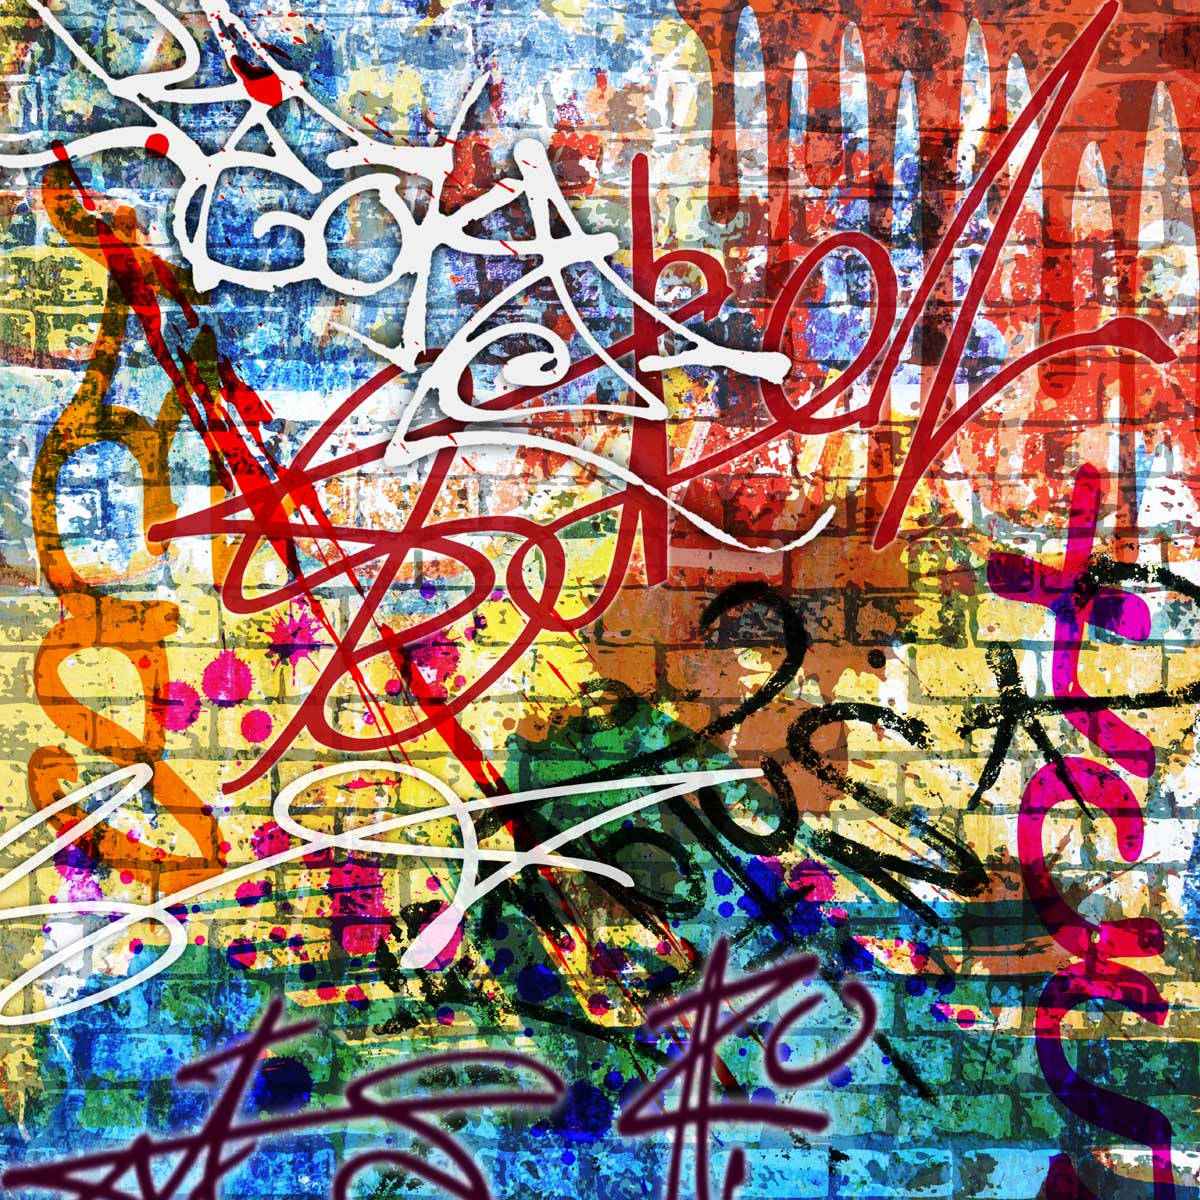 Graffiti 1200X1200 Wallpaper and Background Image